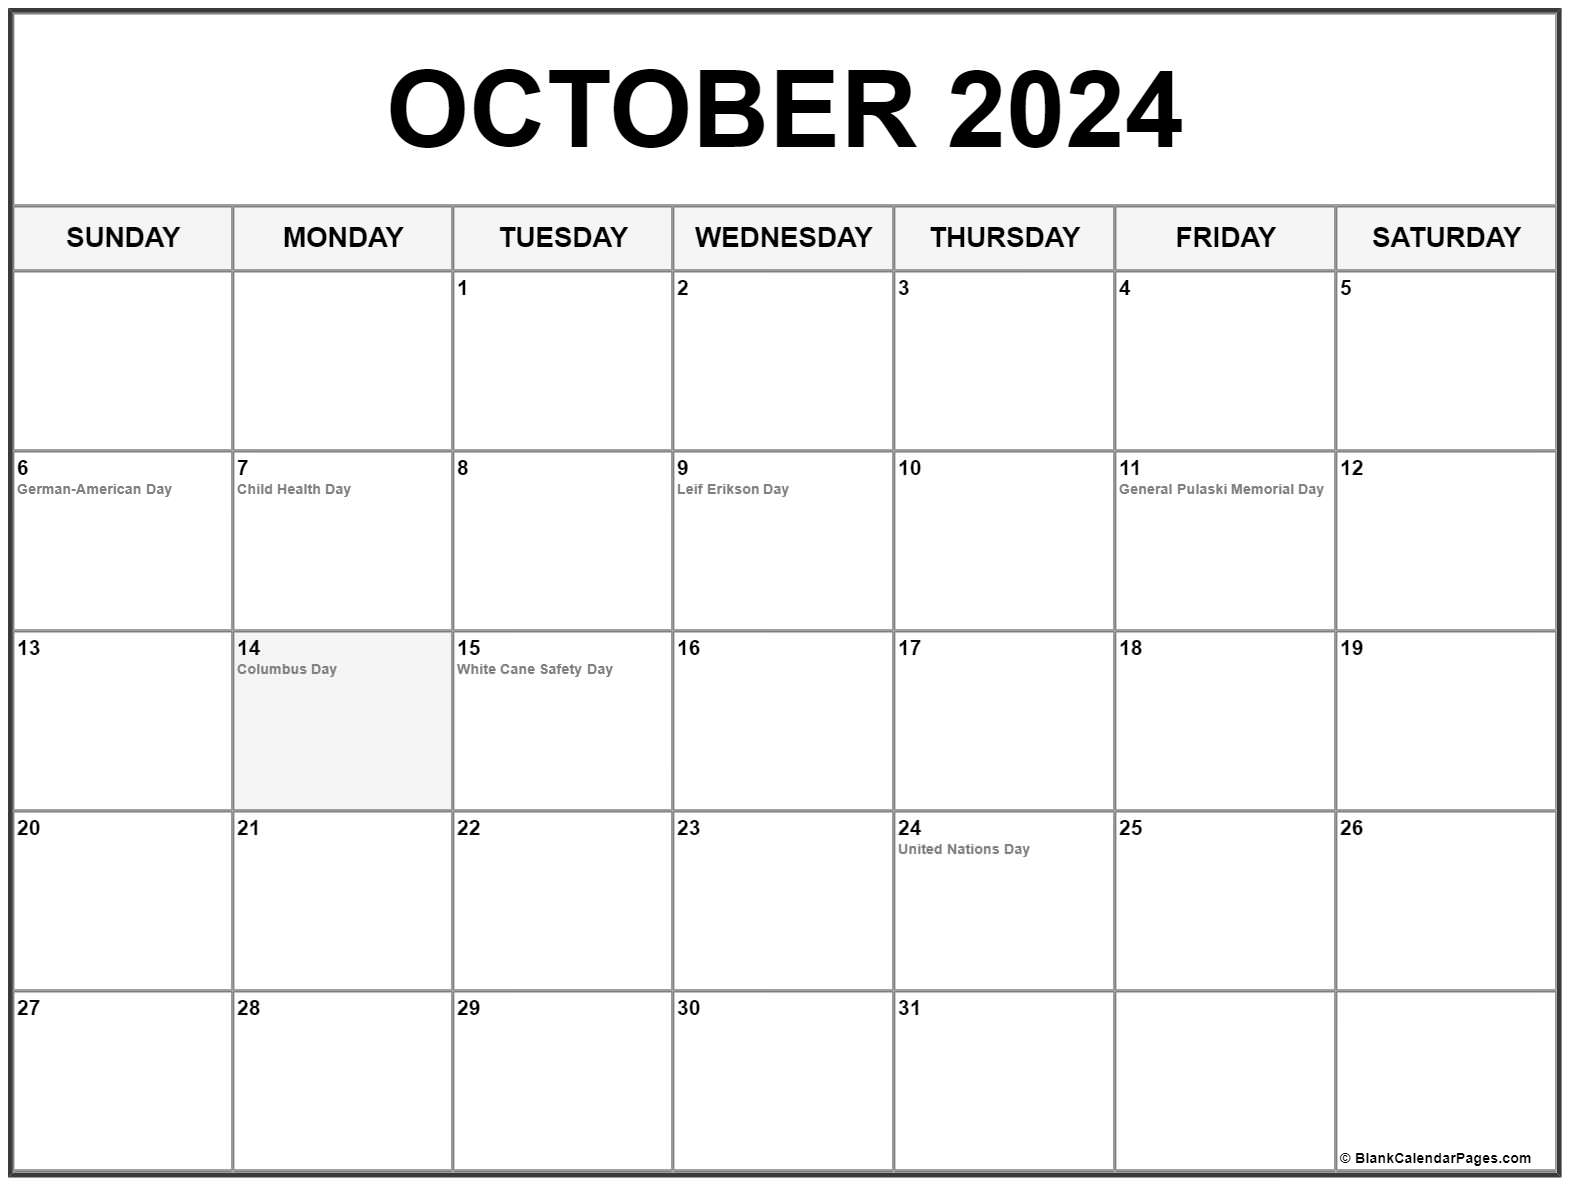 Halloween October 2022 Calendar October 2022 With Holidays Calendar